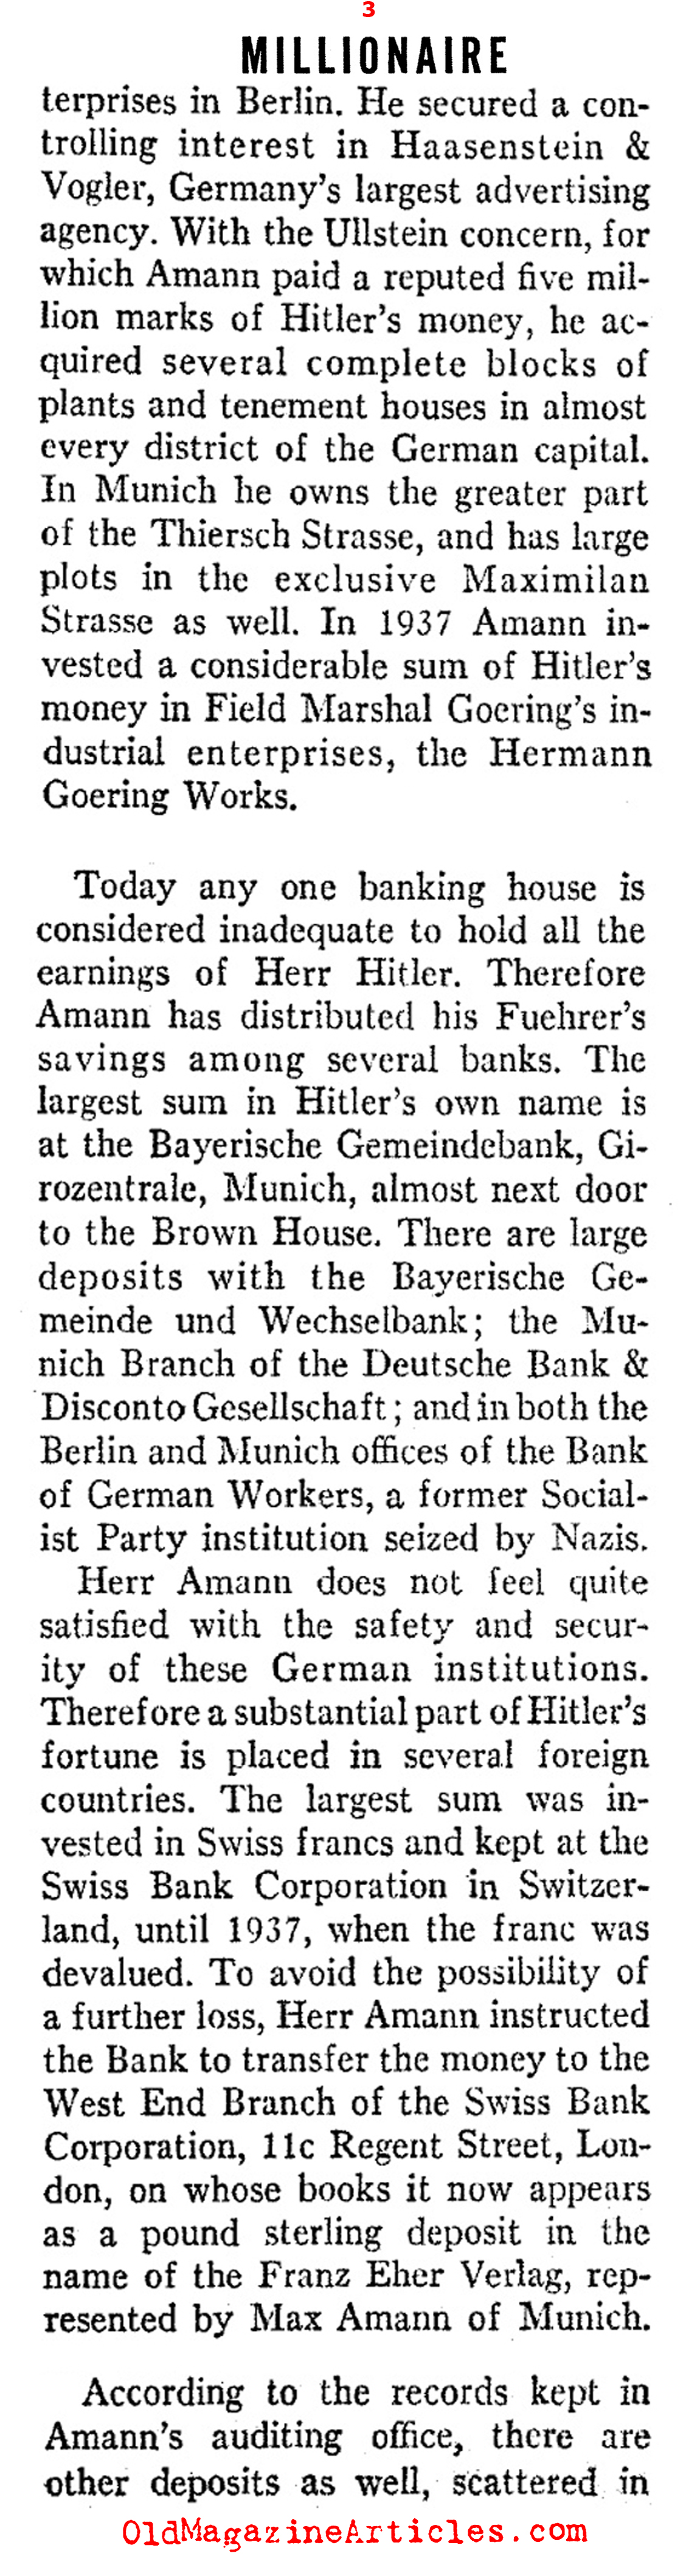 Adolf Hitler: Millionaire (Ken Magazine, 1939)